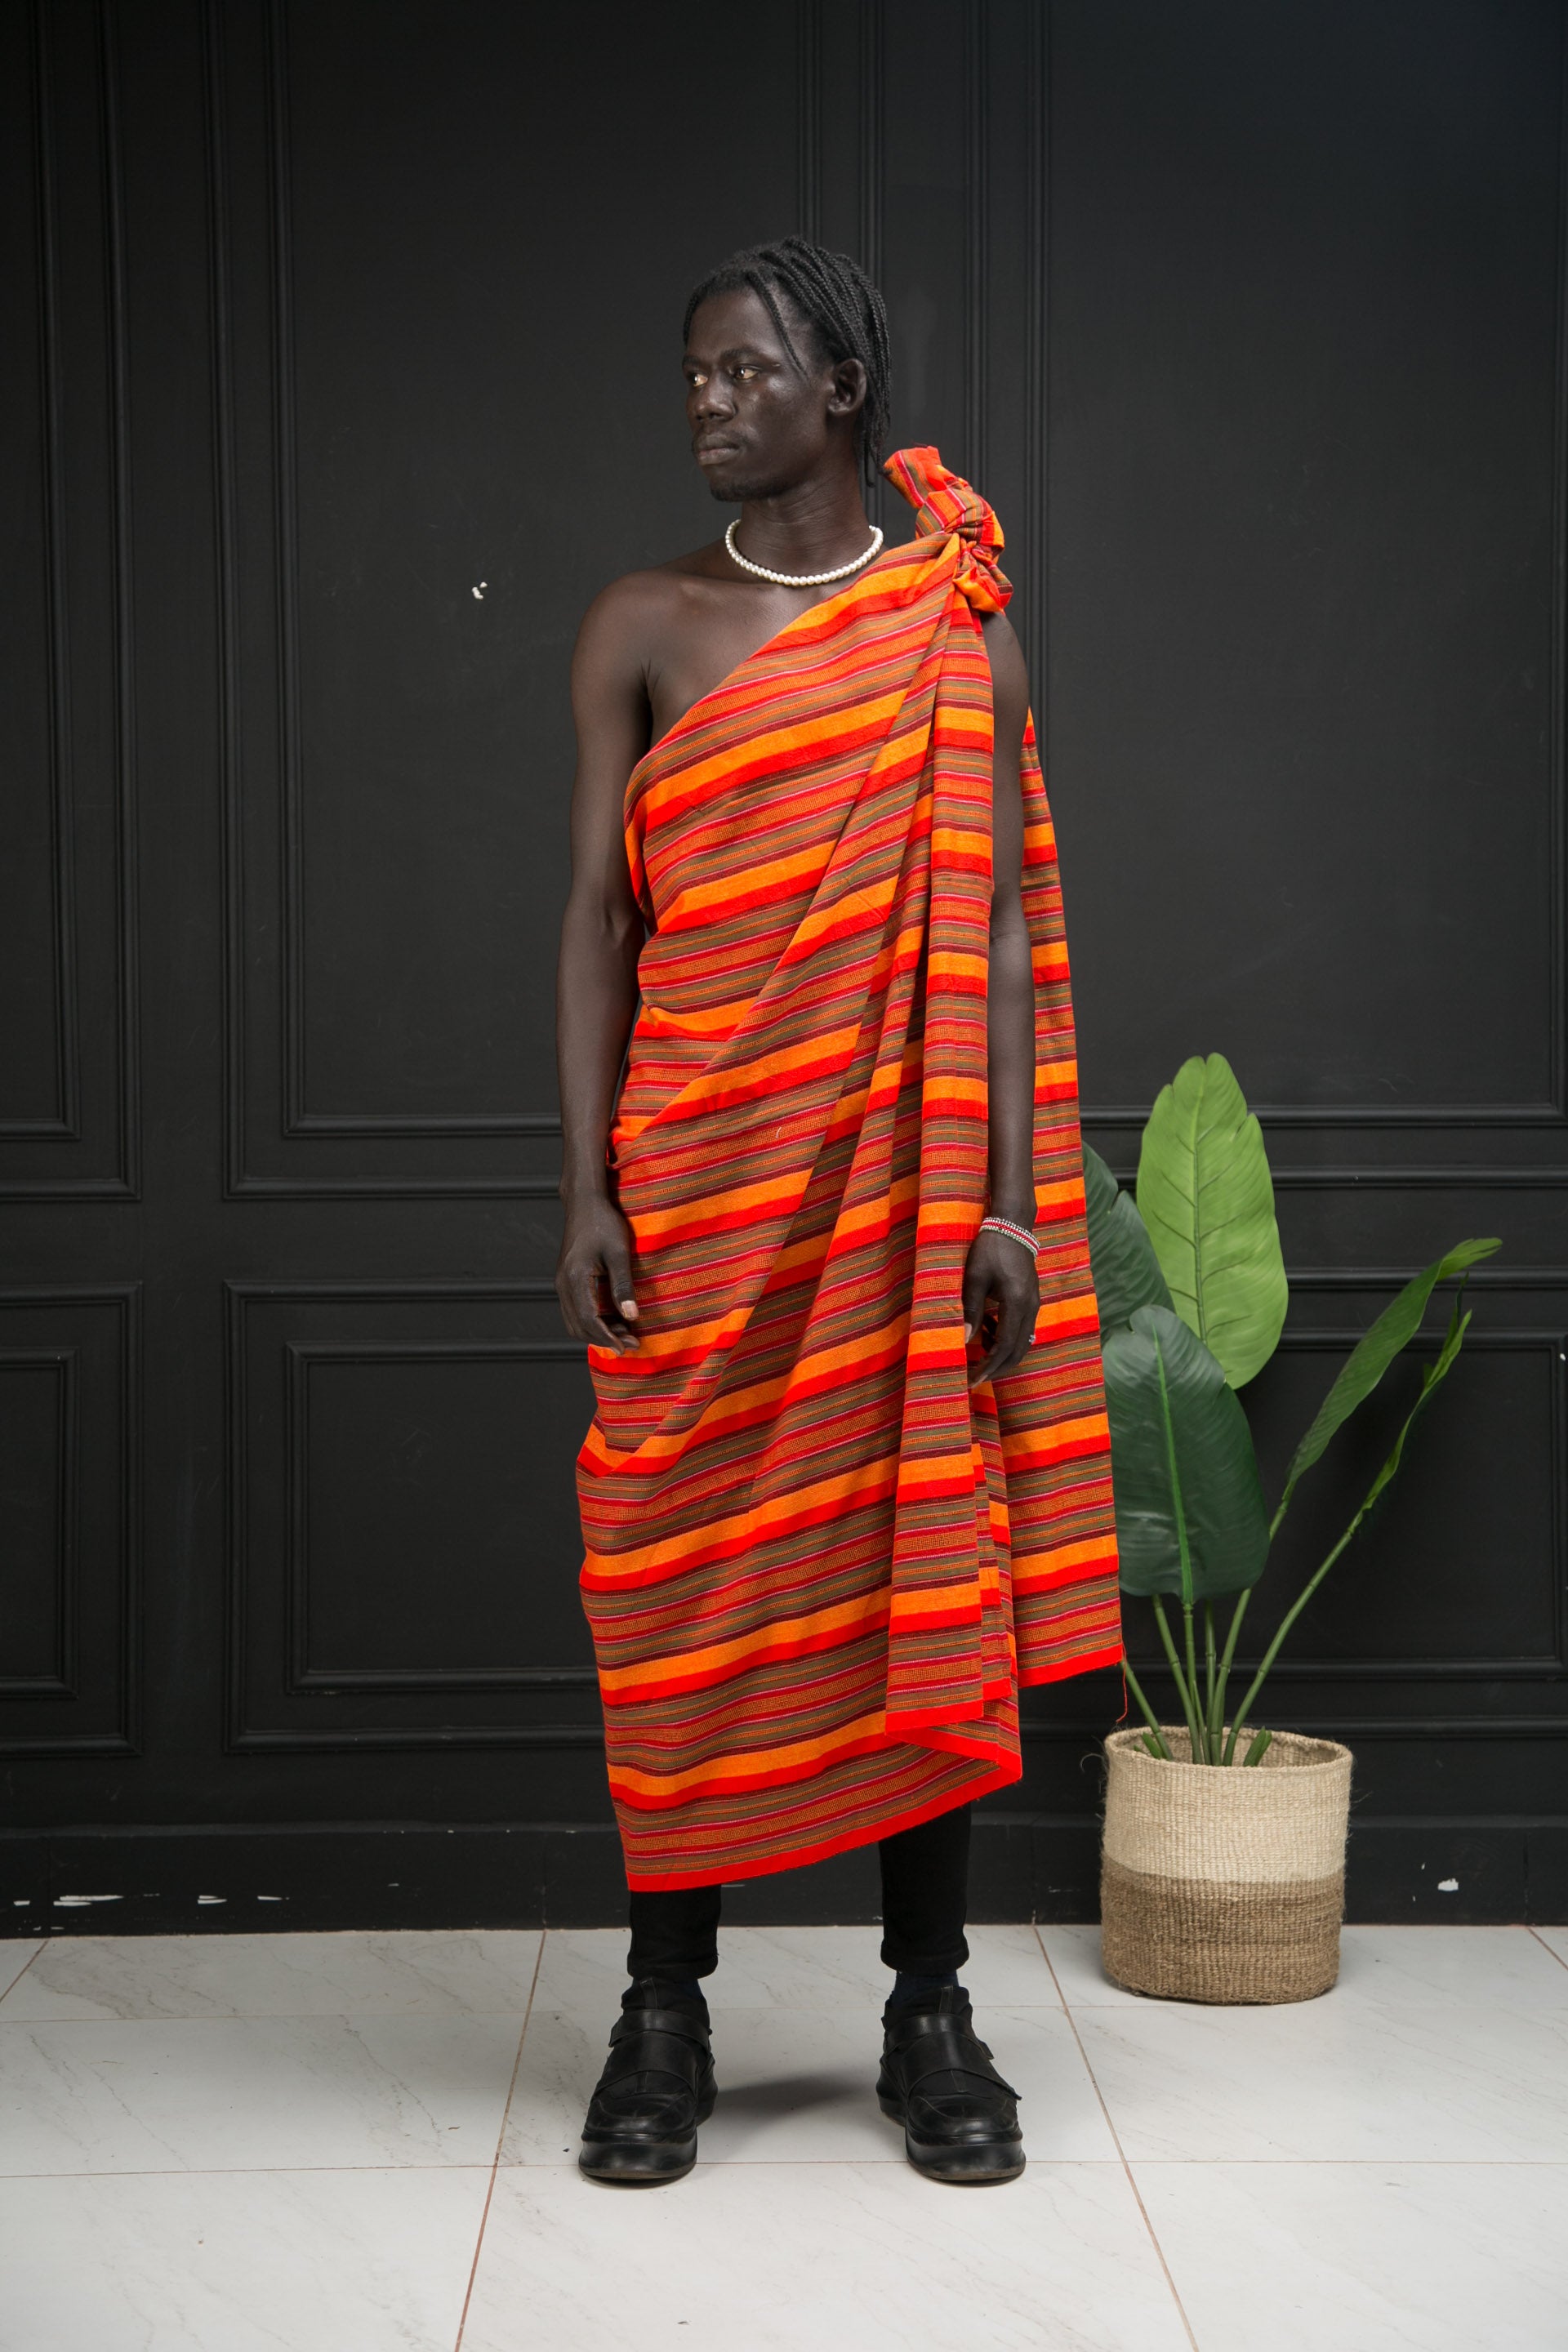 Masaai Shuka Kikoy Authentic African Maasai Blanket Scarf Wrap Throw Fabric  Picnic Mat/Bedspread